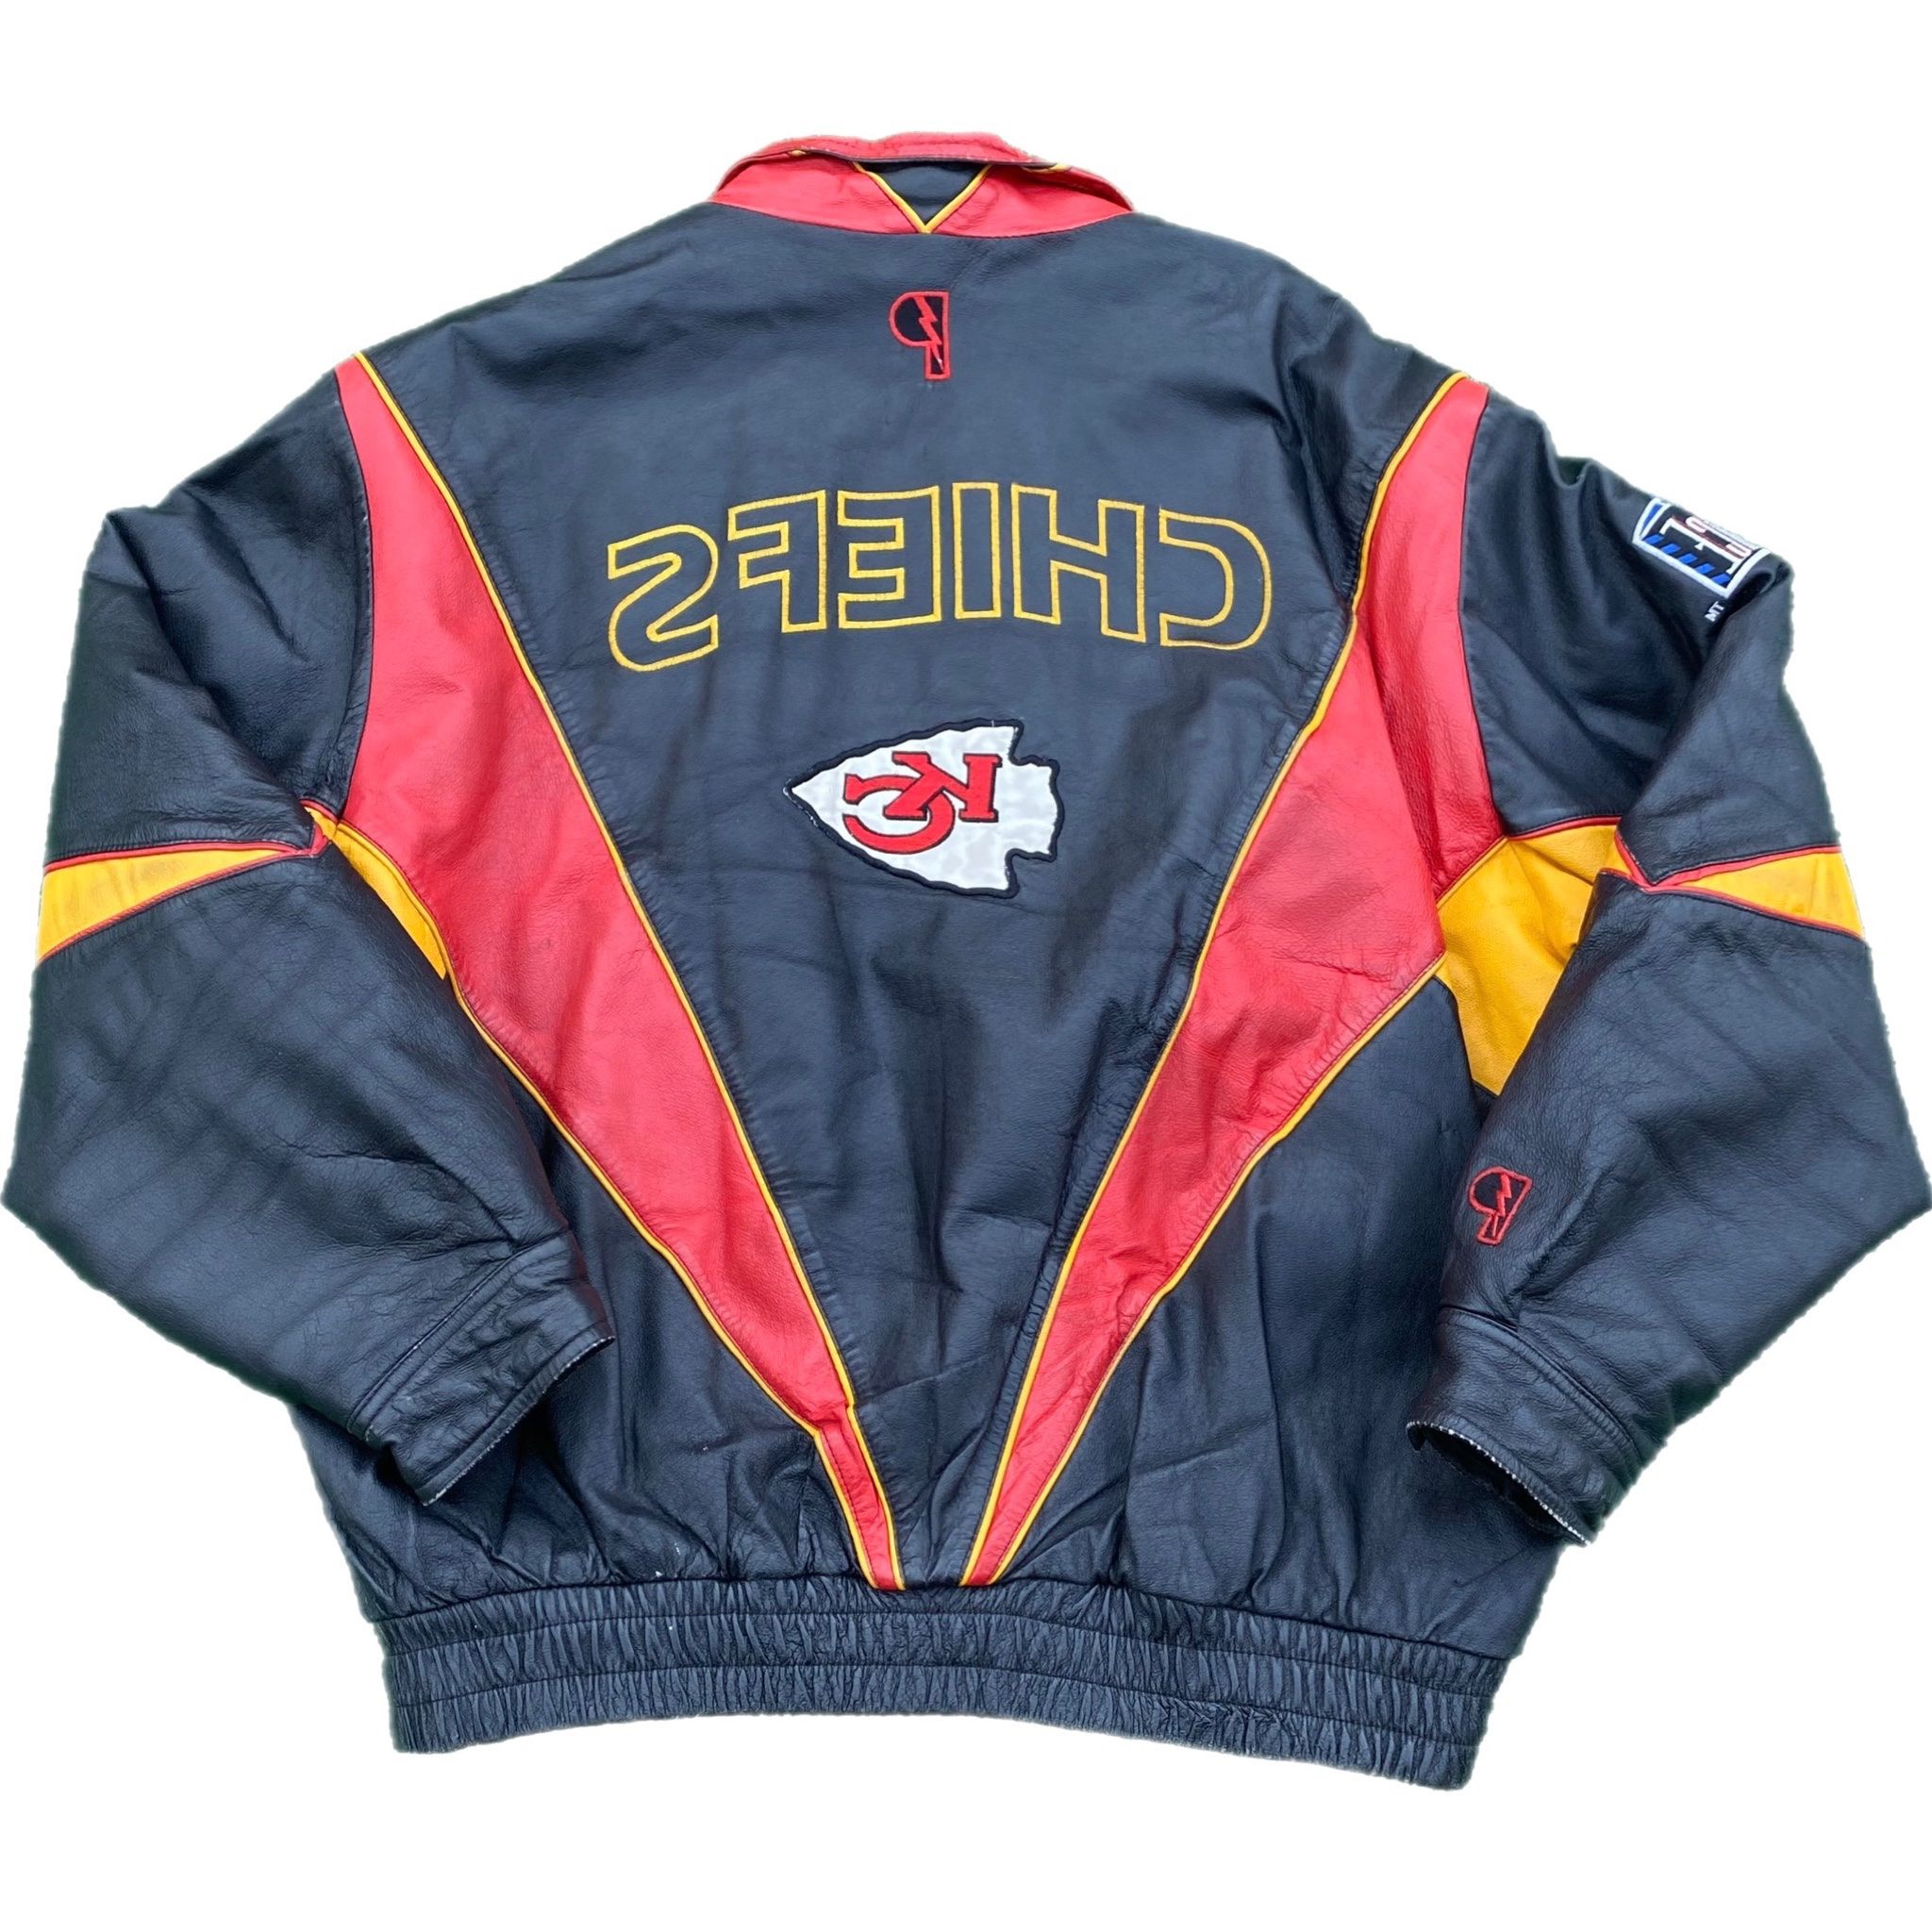 vintage kansas city chiefs jacket